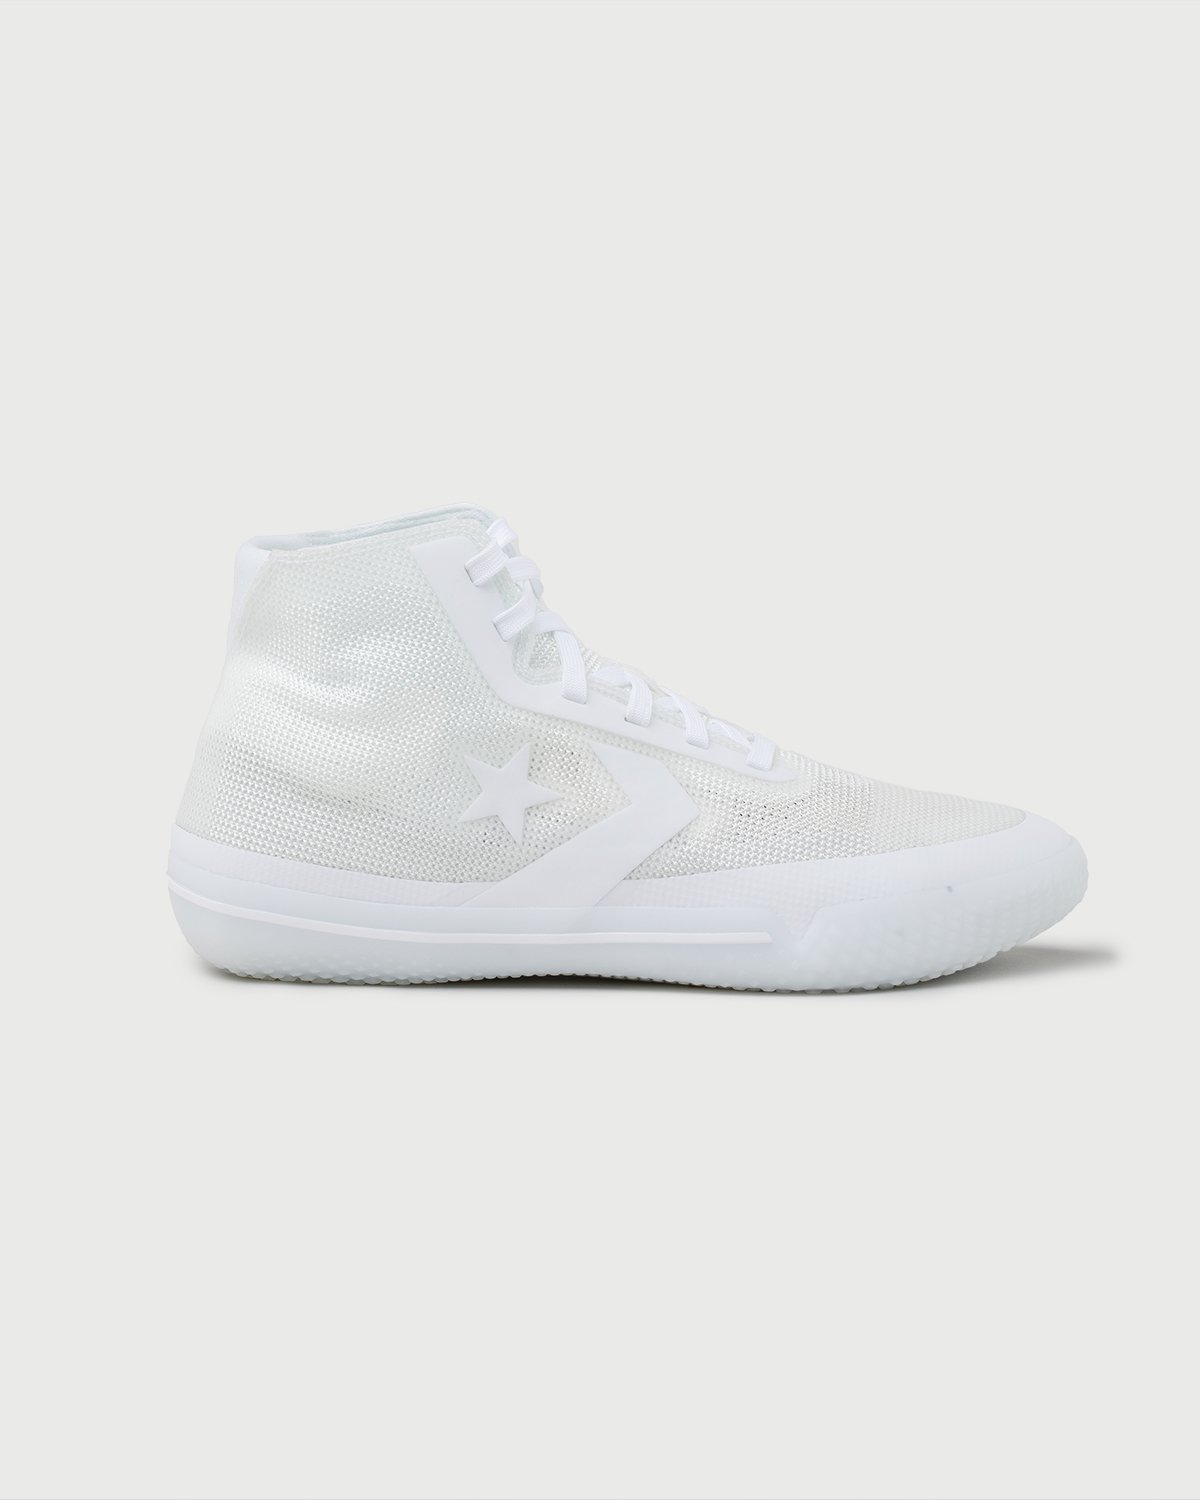 Converse - All Star Pro Bb Hi White - Footwear - White - Image 1